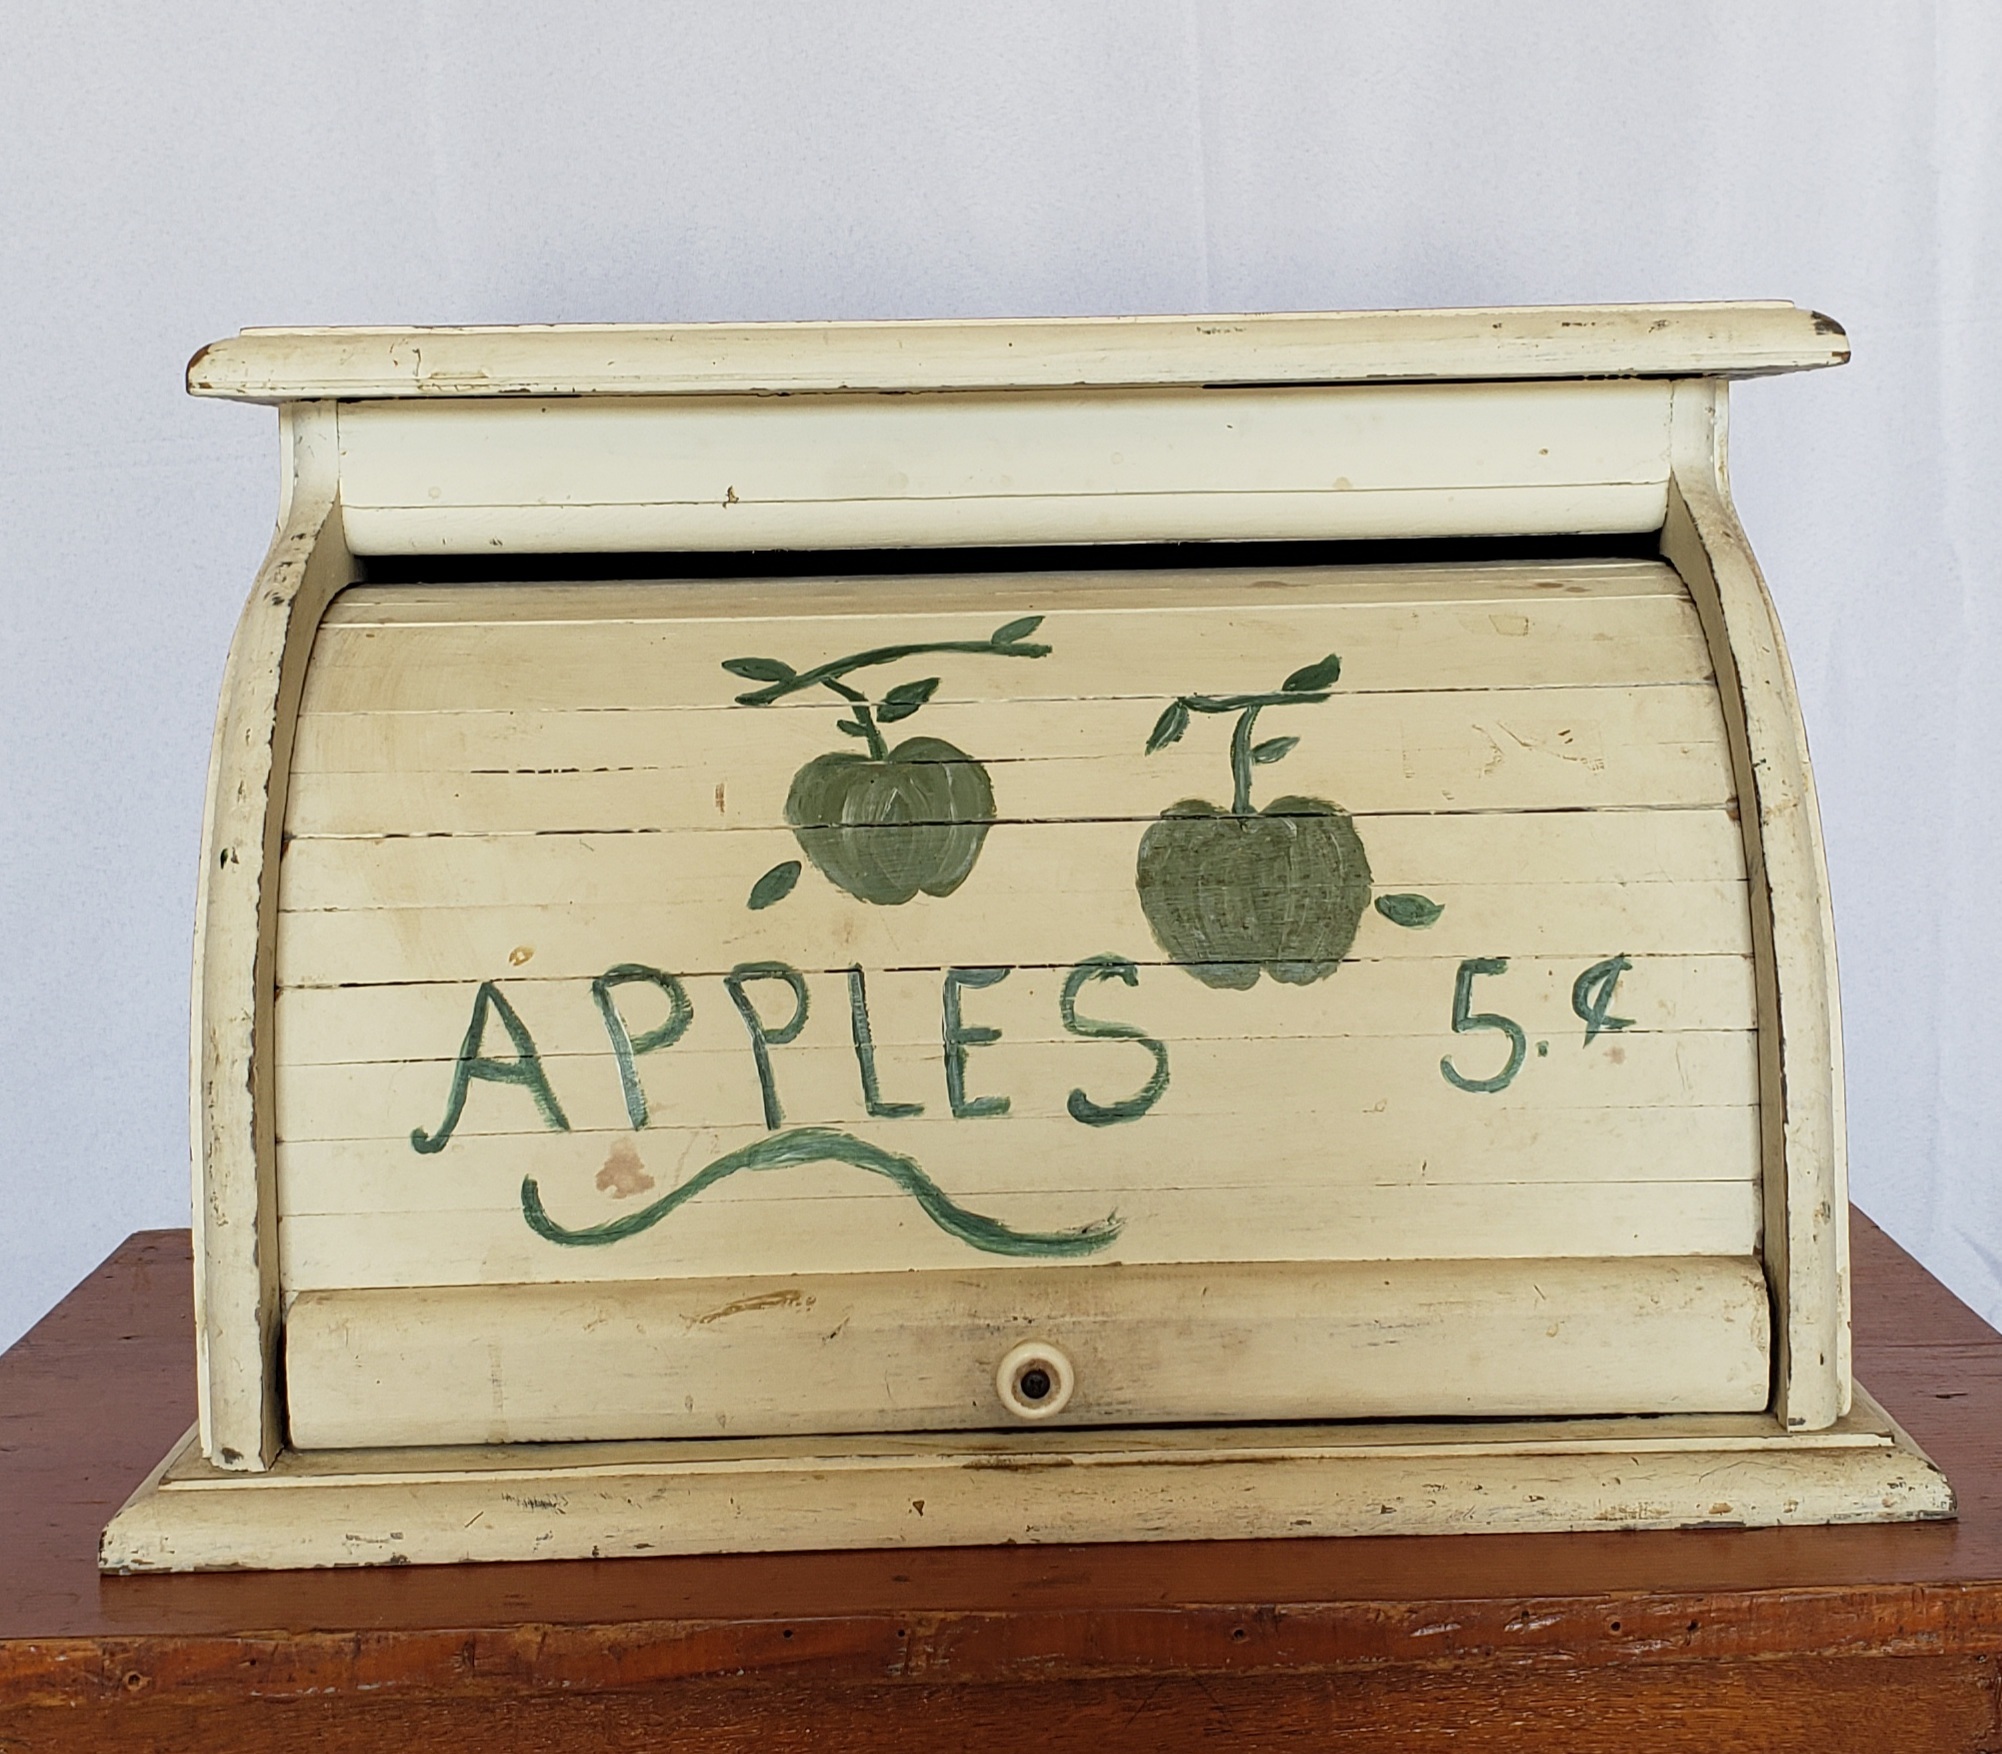 Breadbox "Apples 5¢"